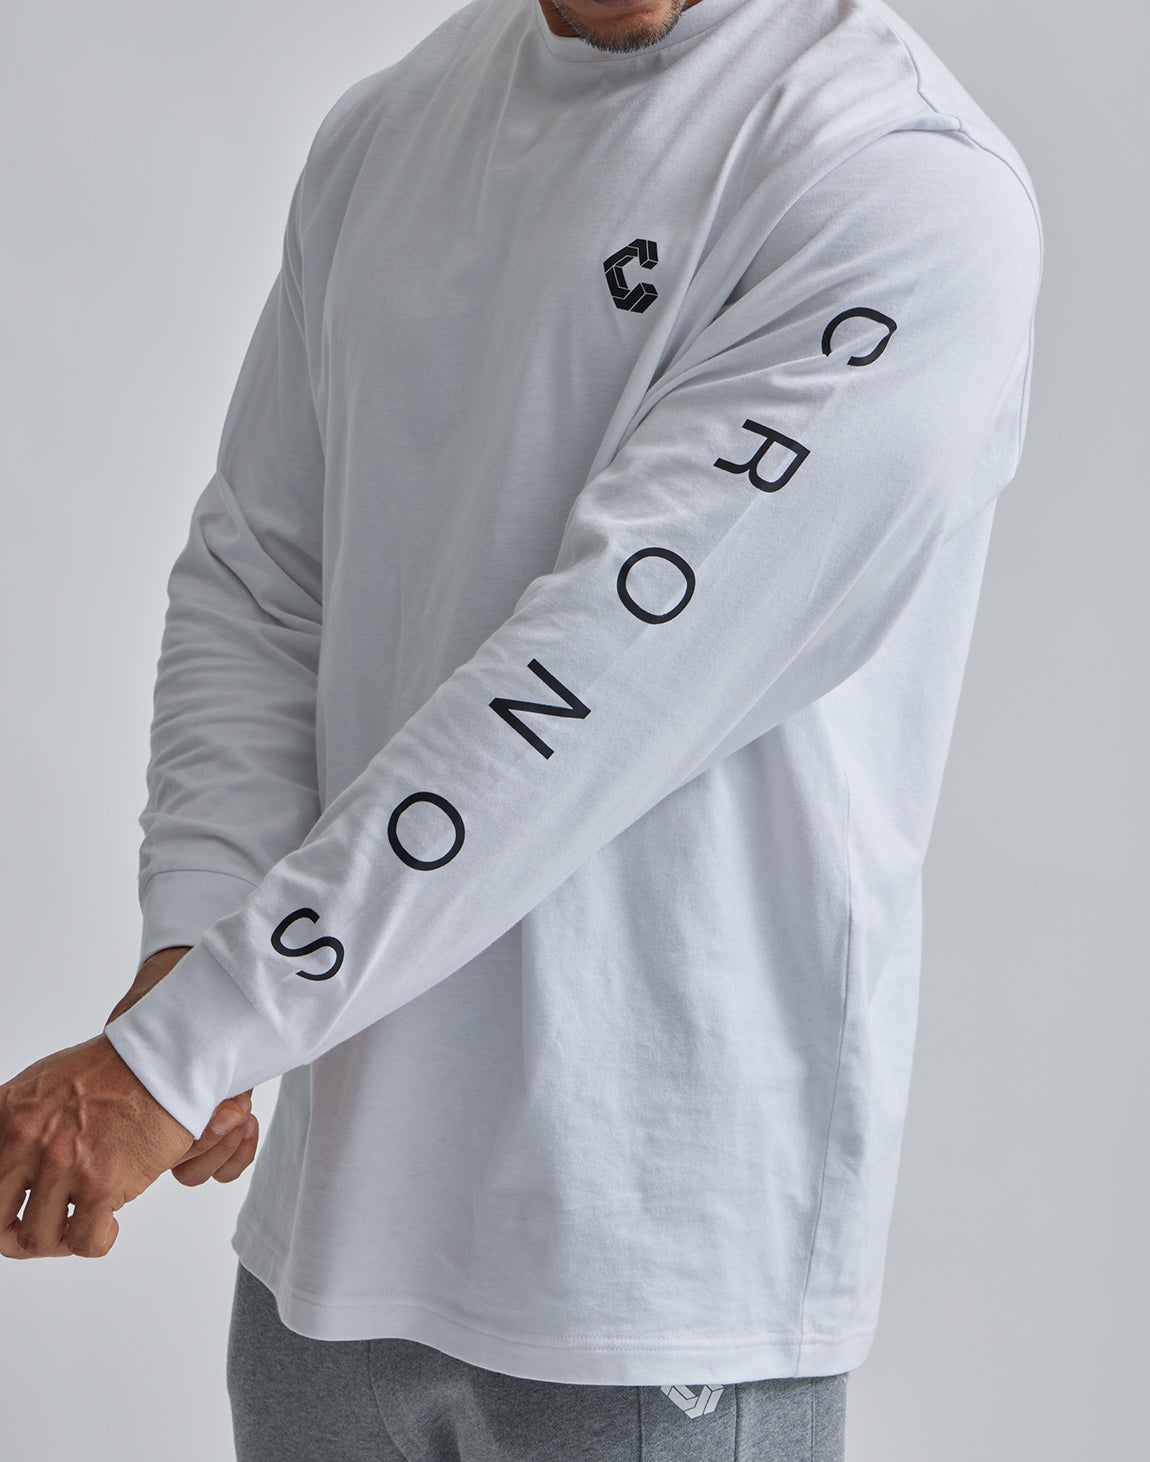 CRONOS LOGO LONGSLEEVE – クロノス CRONOS Official Store